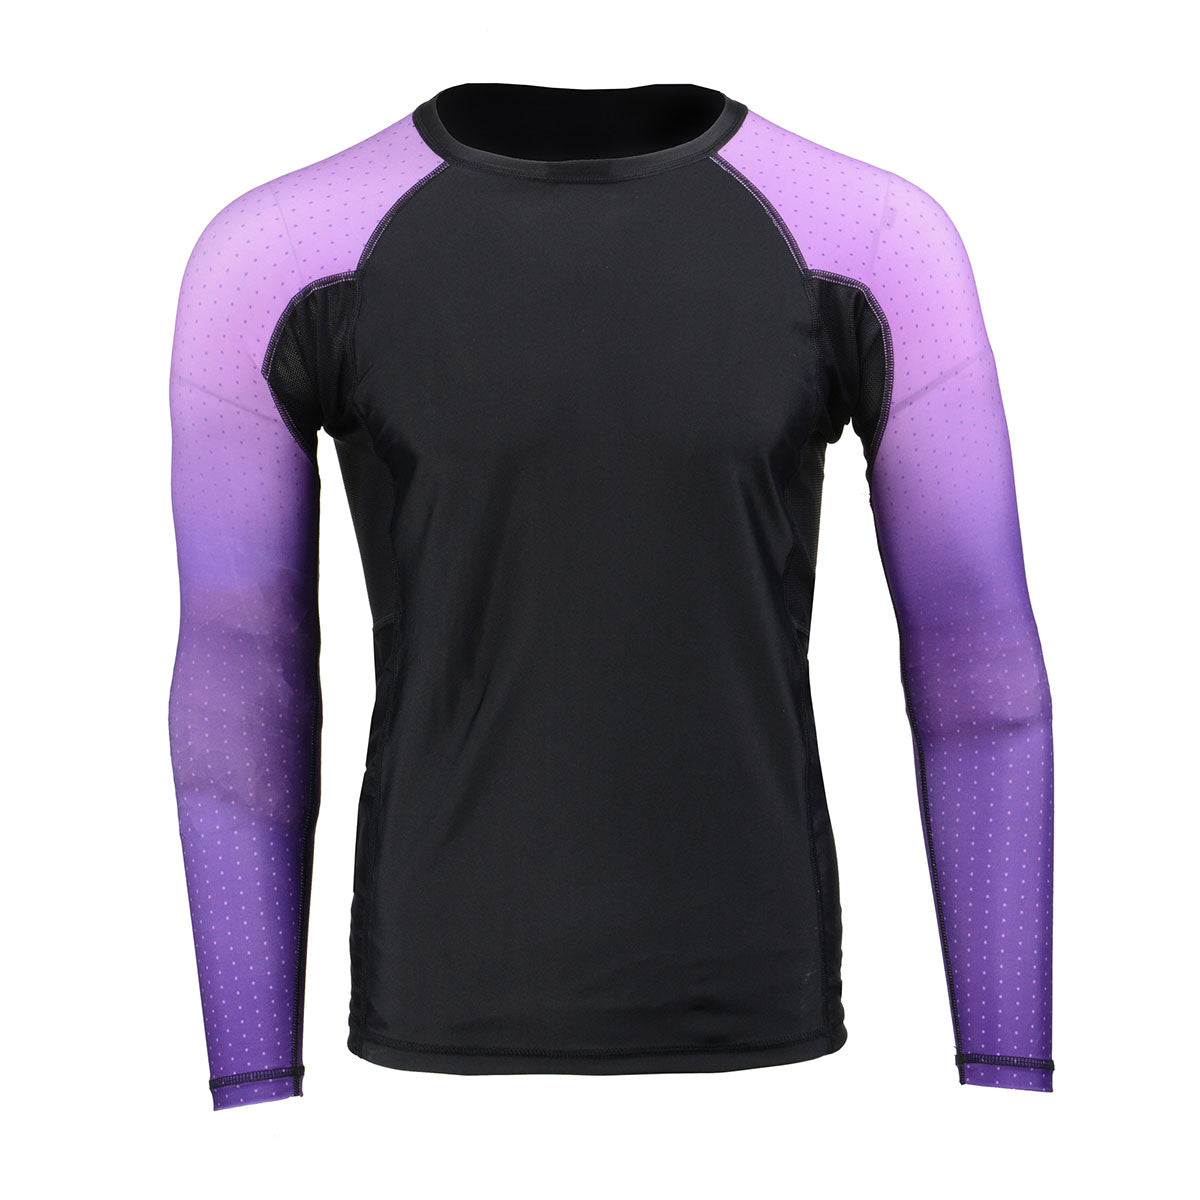 X-Fitness XFM7000 Men's Black and Purple Long Sleeve Compression Rash Guard Athletic Shirt- MMA, BJJ, Wrestling, Cross Training